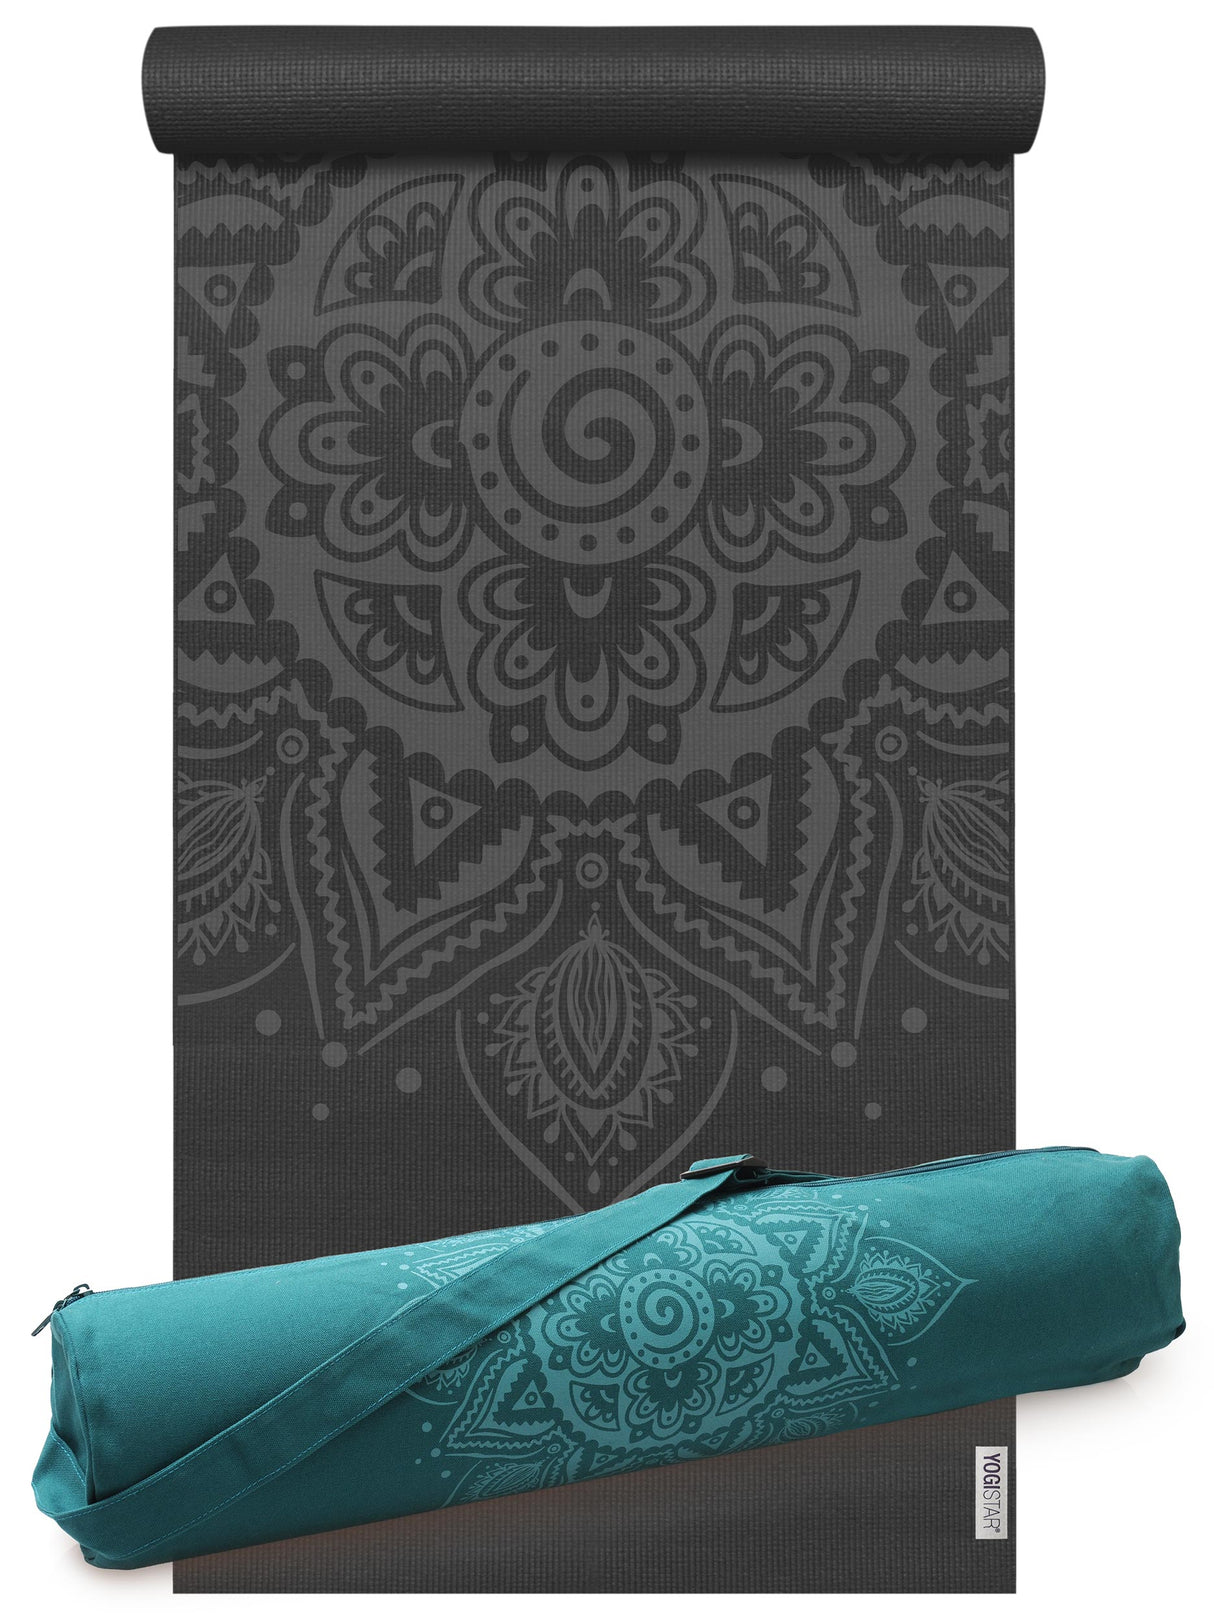 Yoga-Set Starter Edition - spiral mandala (Yogamatte + Yogatasche) - zen black